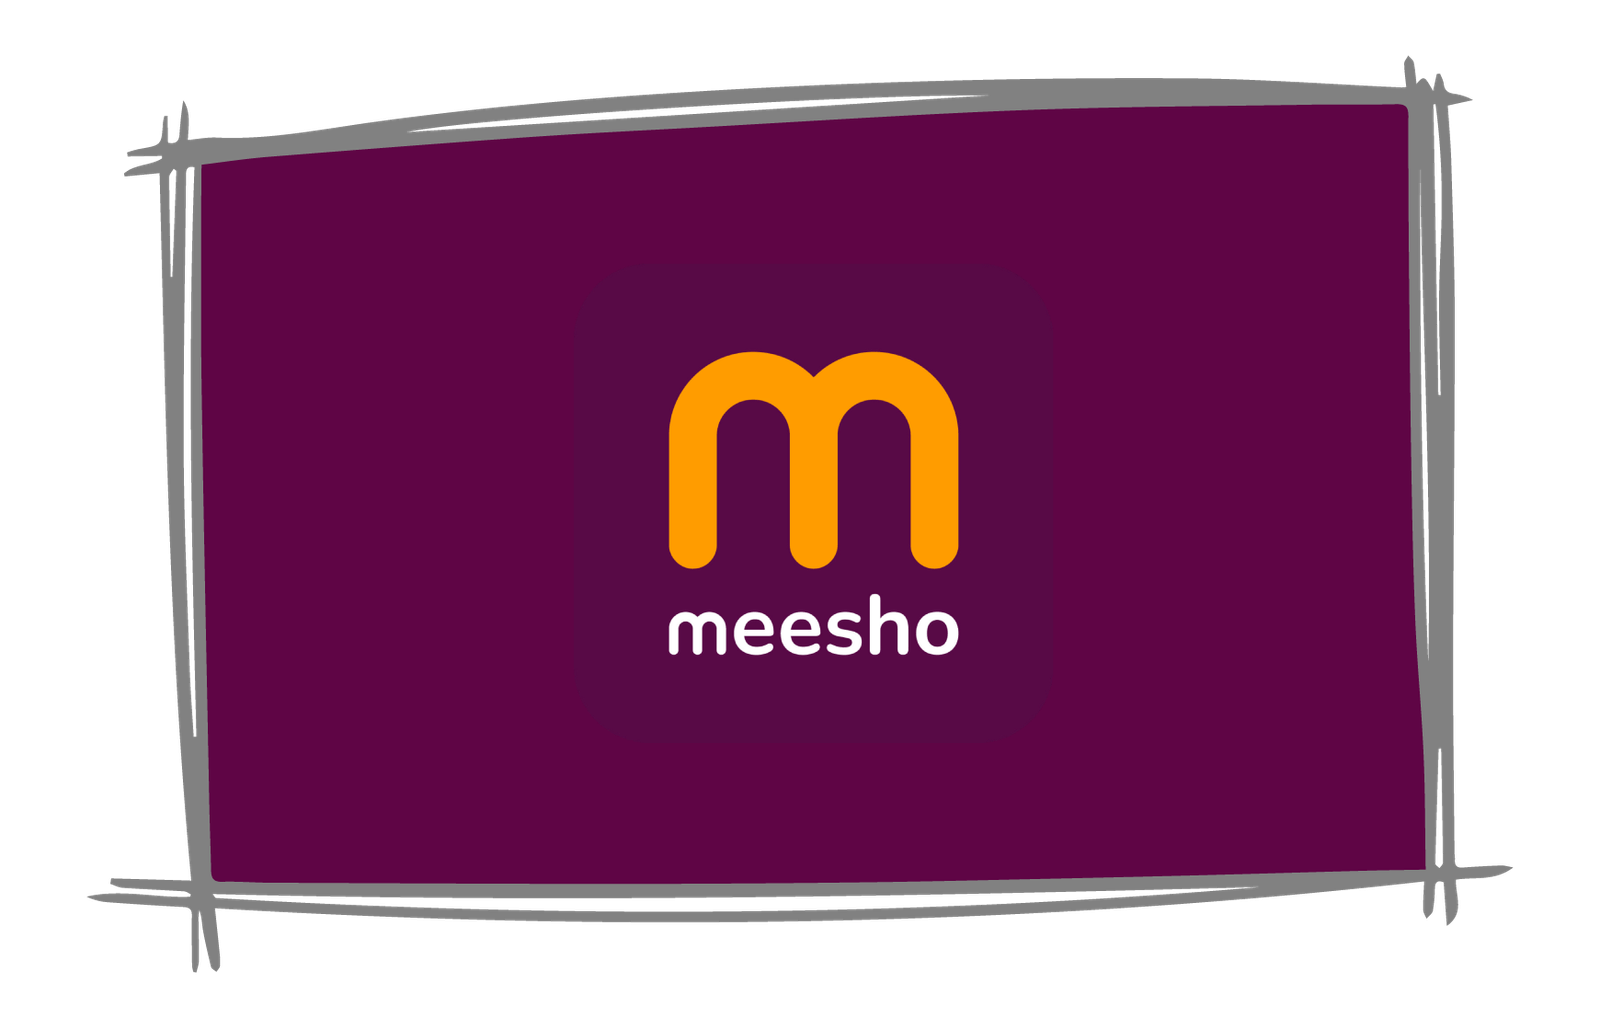 Meesho’ brand positioning